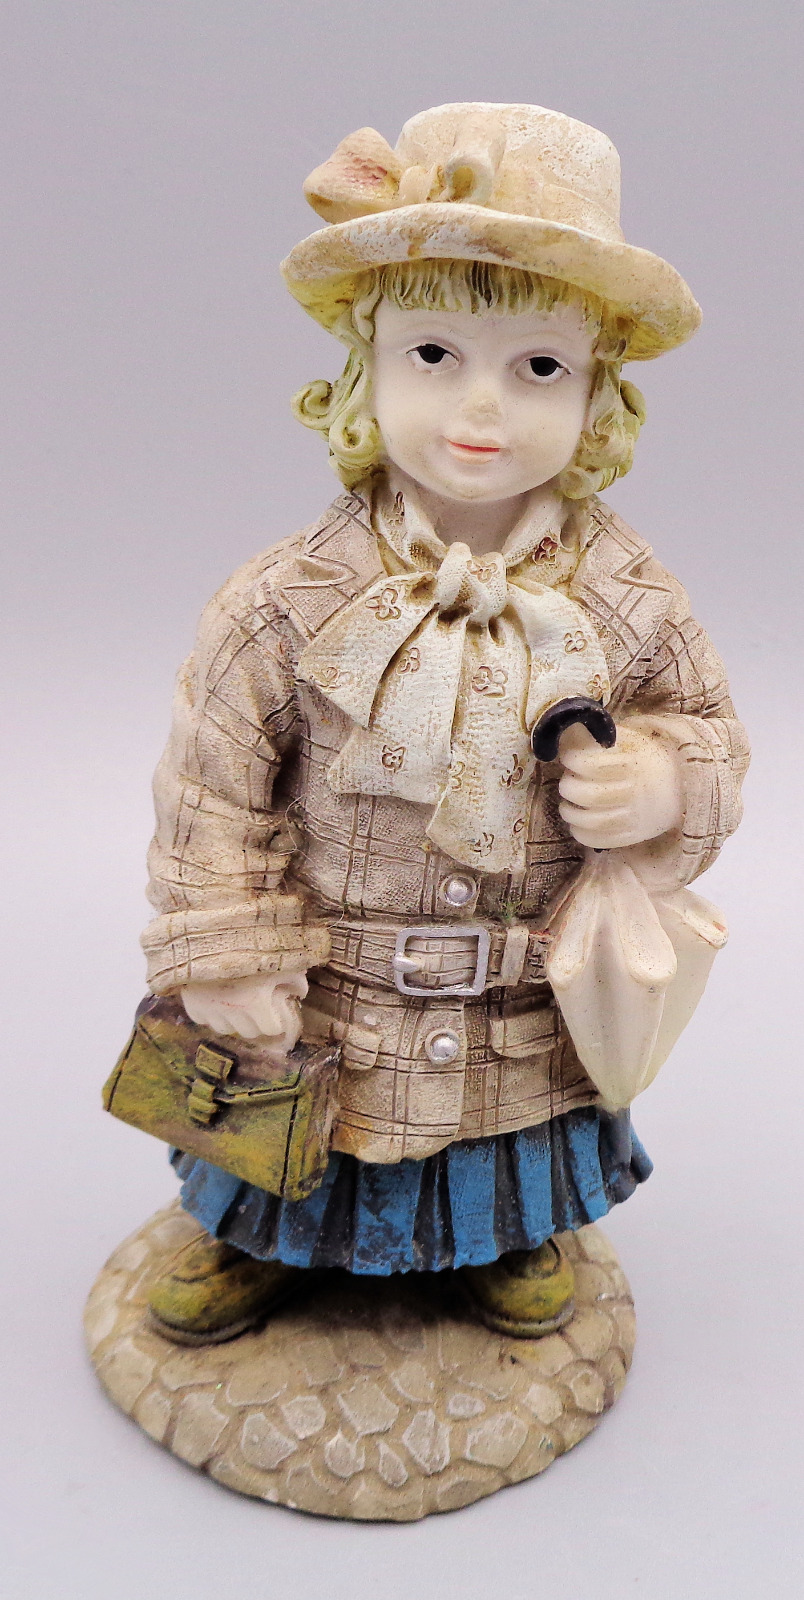 Vintage Resin Blonde Girl Figurine in Trench Coat w/ Hat & Umbrella Figurine